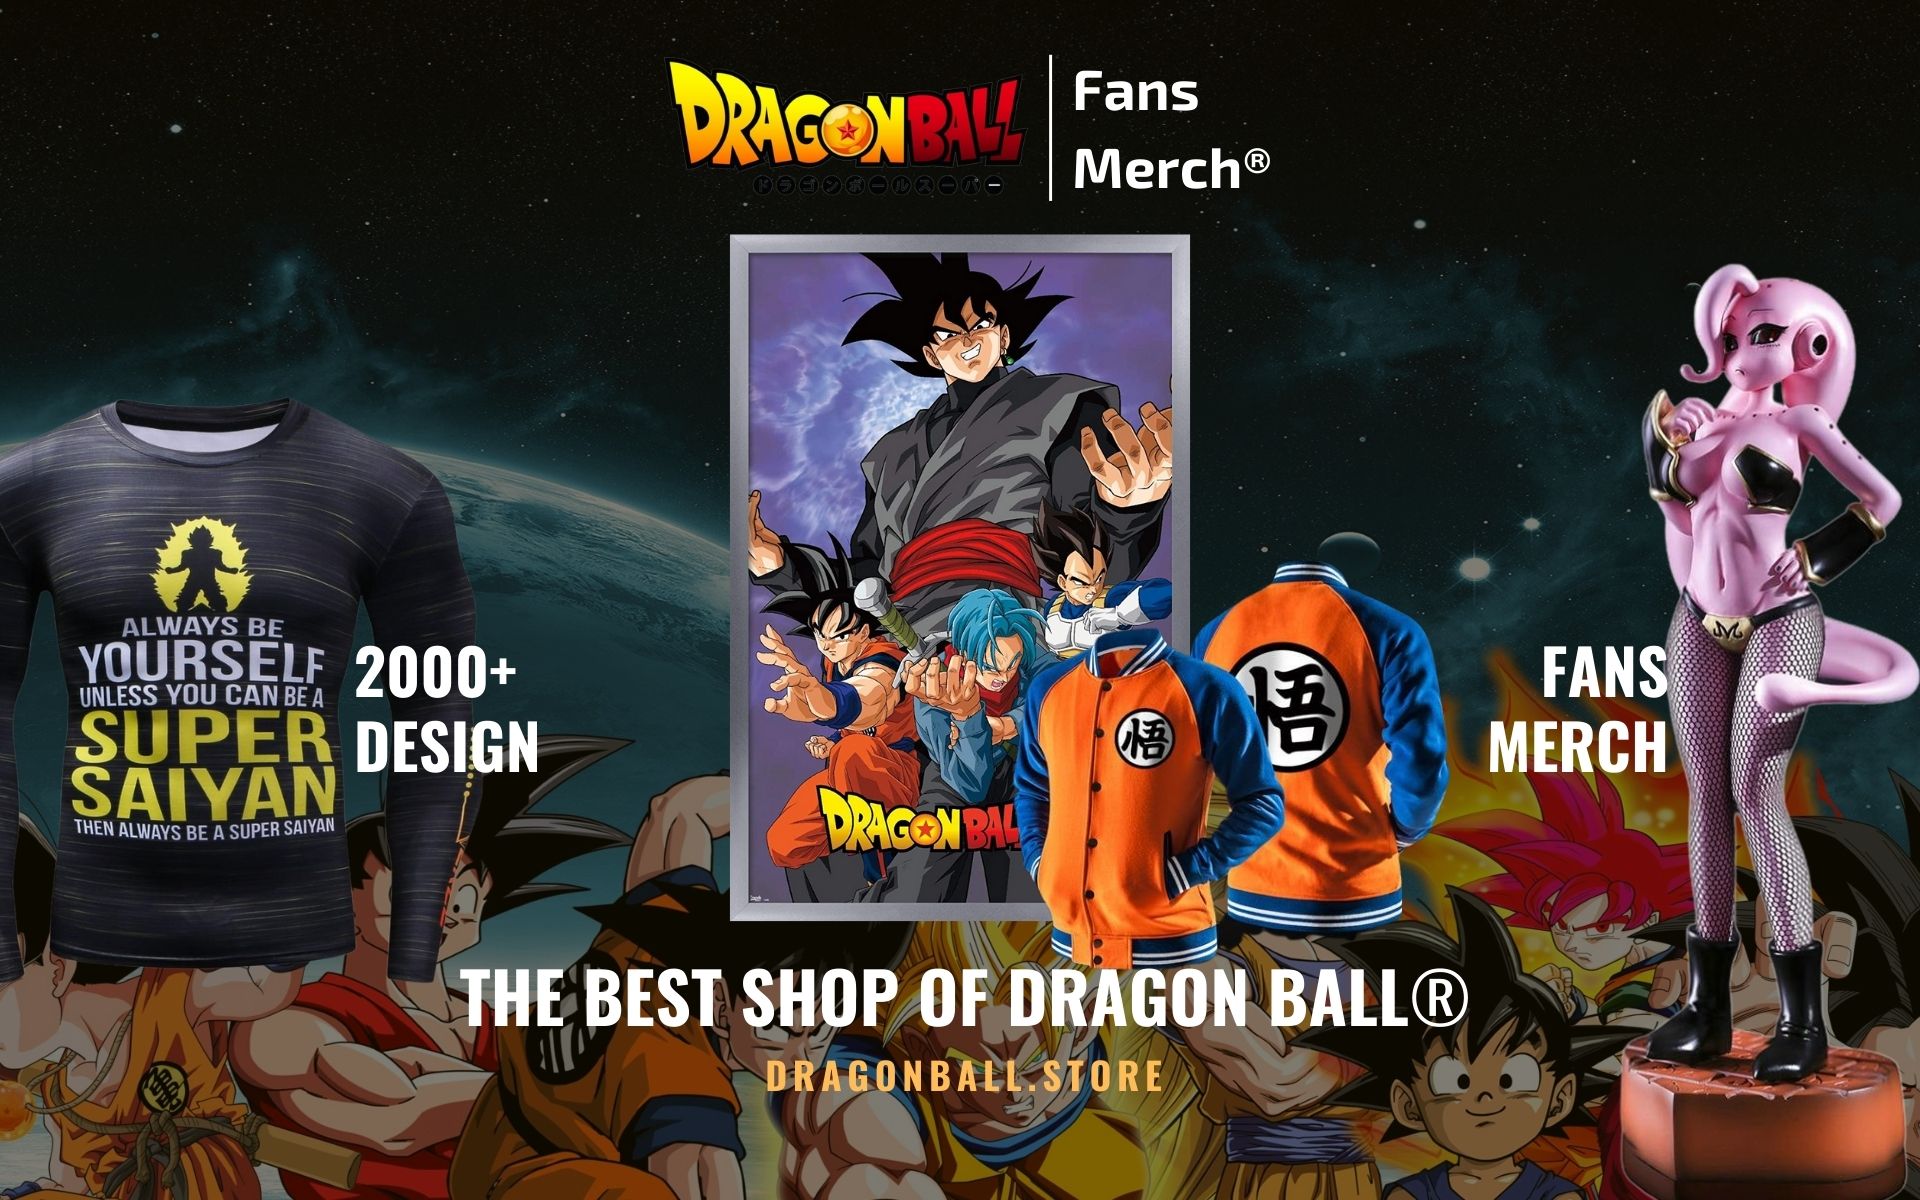 Dragon Ball Backpacks - Kanjis Go and Kaio DBZ store » Dragon Ball Store